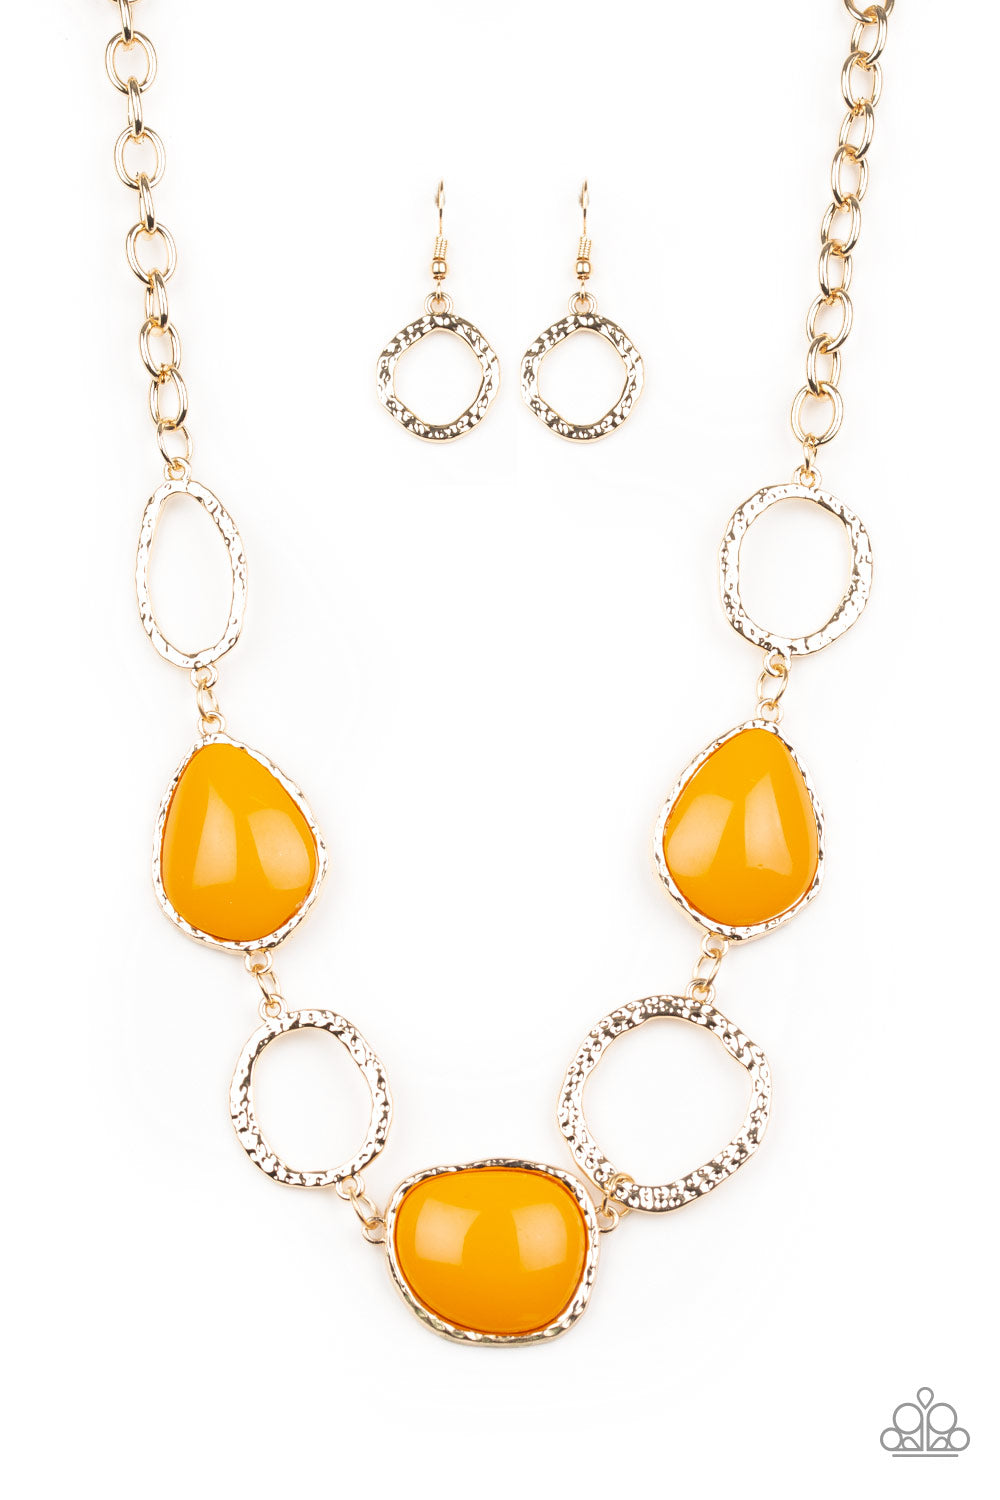 Paparazzi Accessories Heirloom - Orange Necklaces - Lady T Accessories